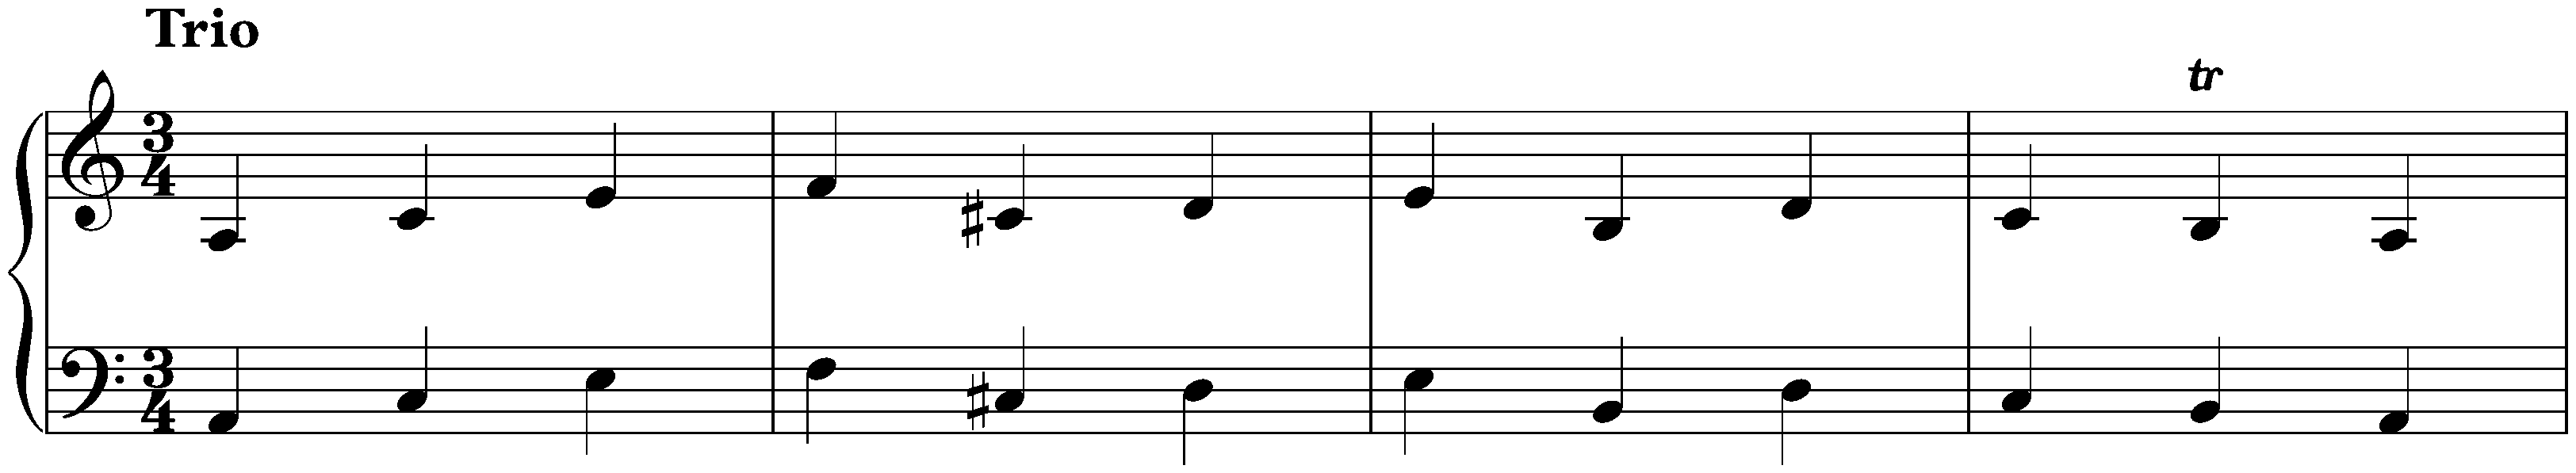 Sonata in A major, Hob. XVI:5; 2. Menuet – Trio